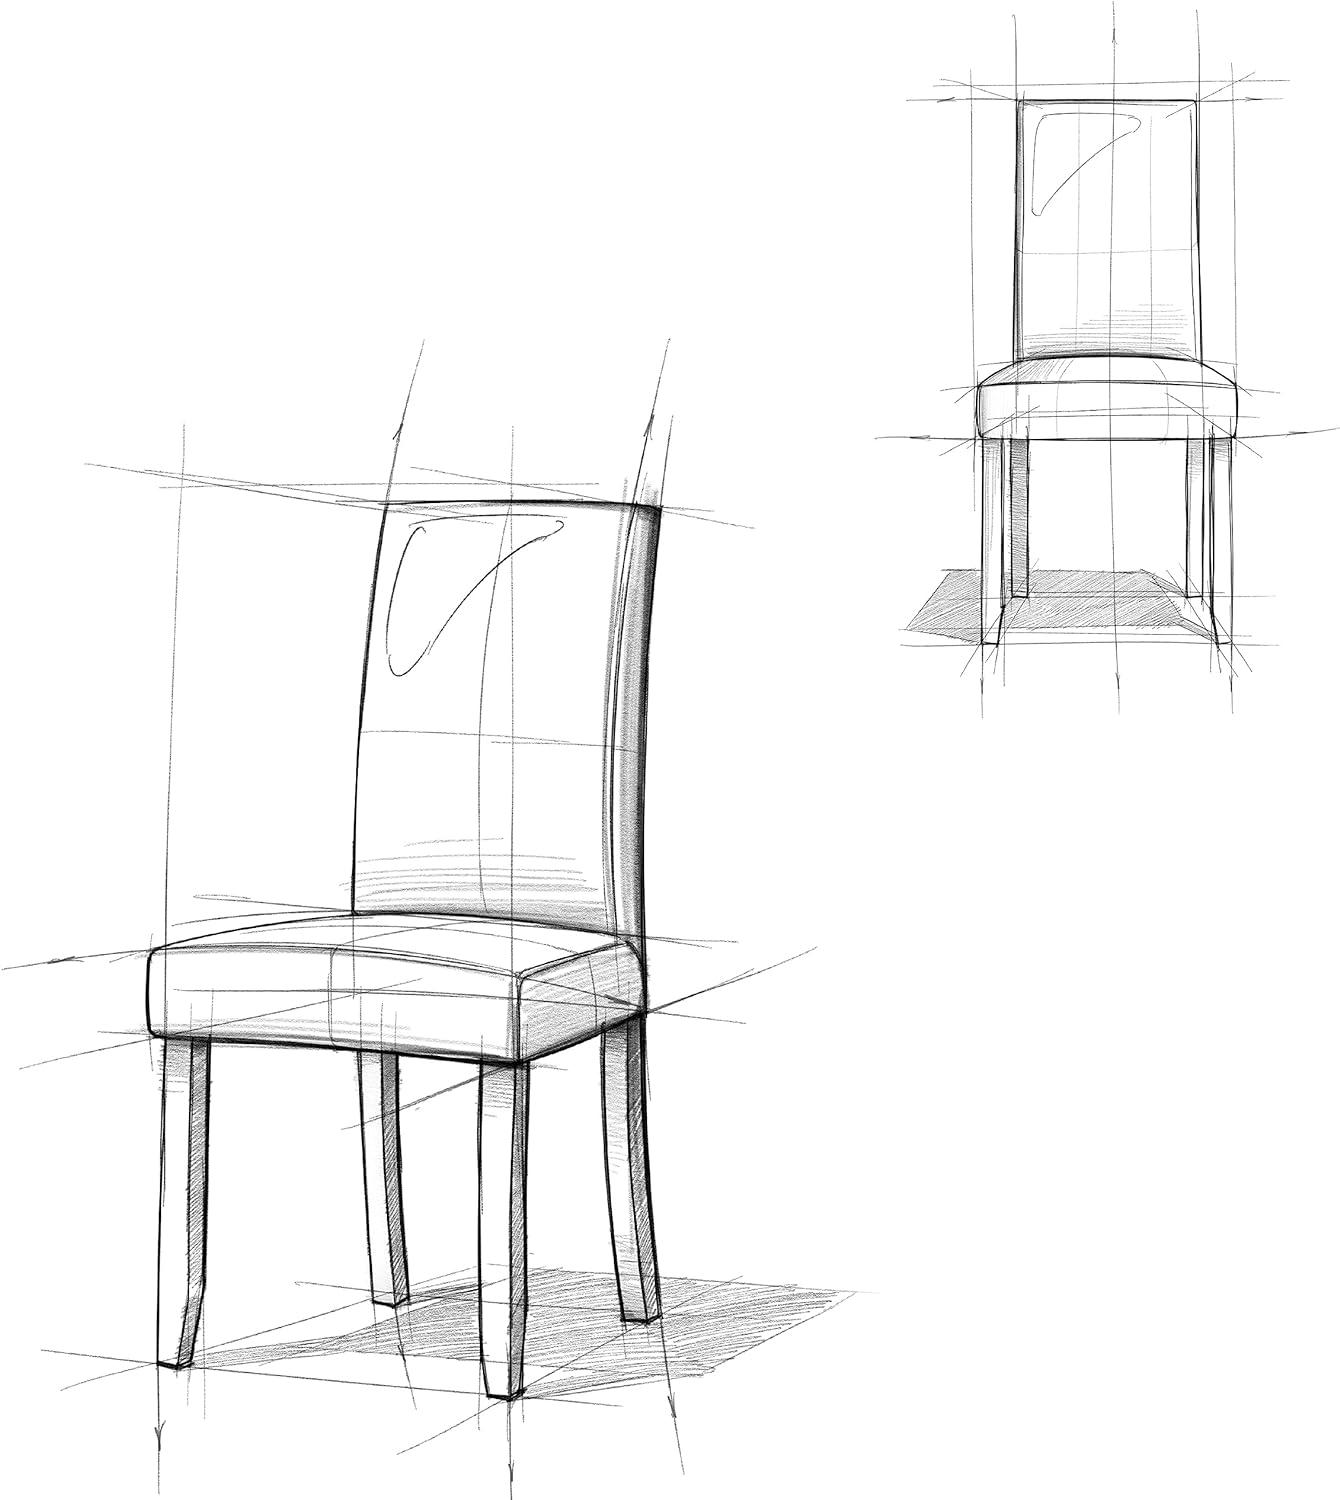 Elegant Dove Grey Linen Upholstered Parsons Dining Chair